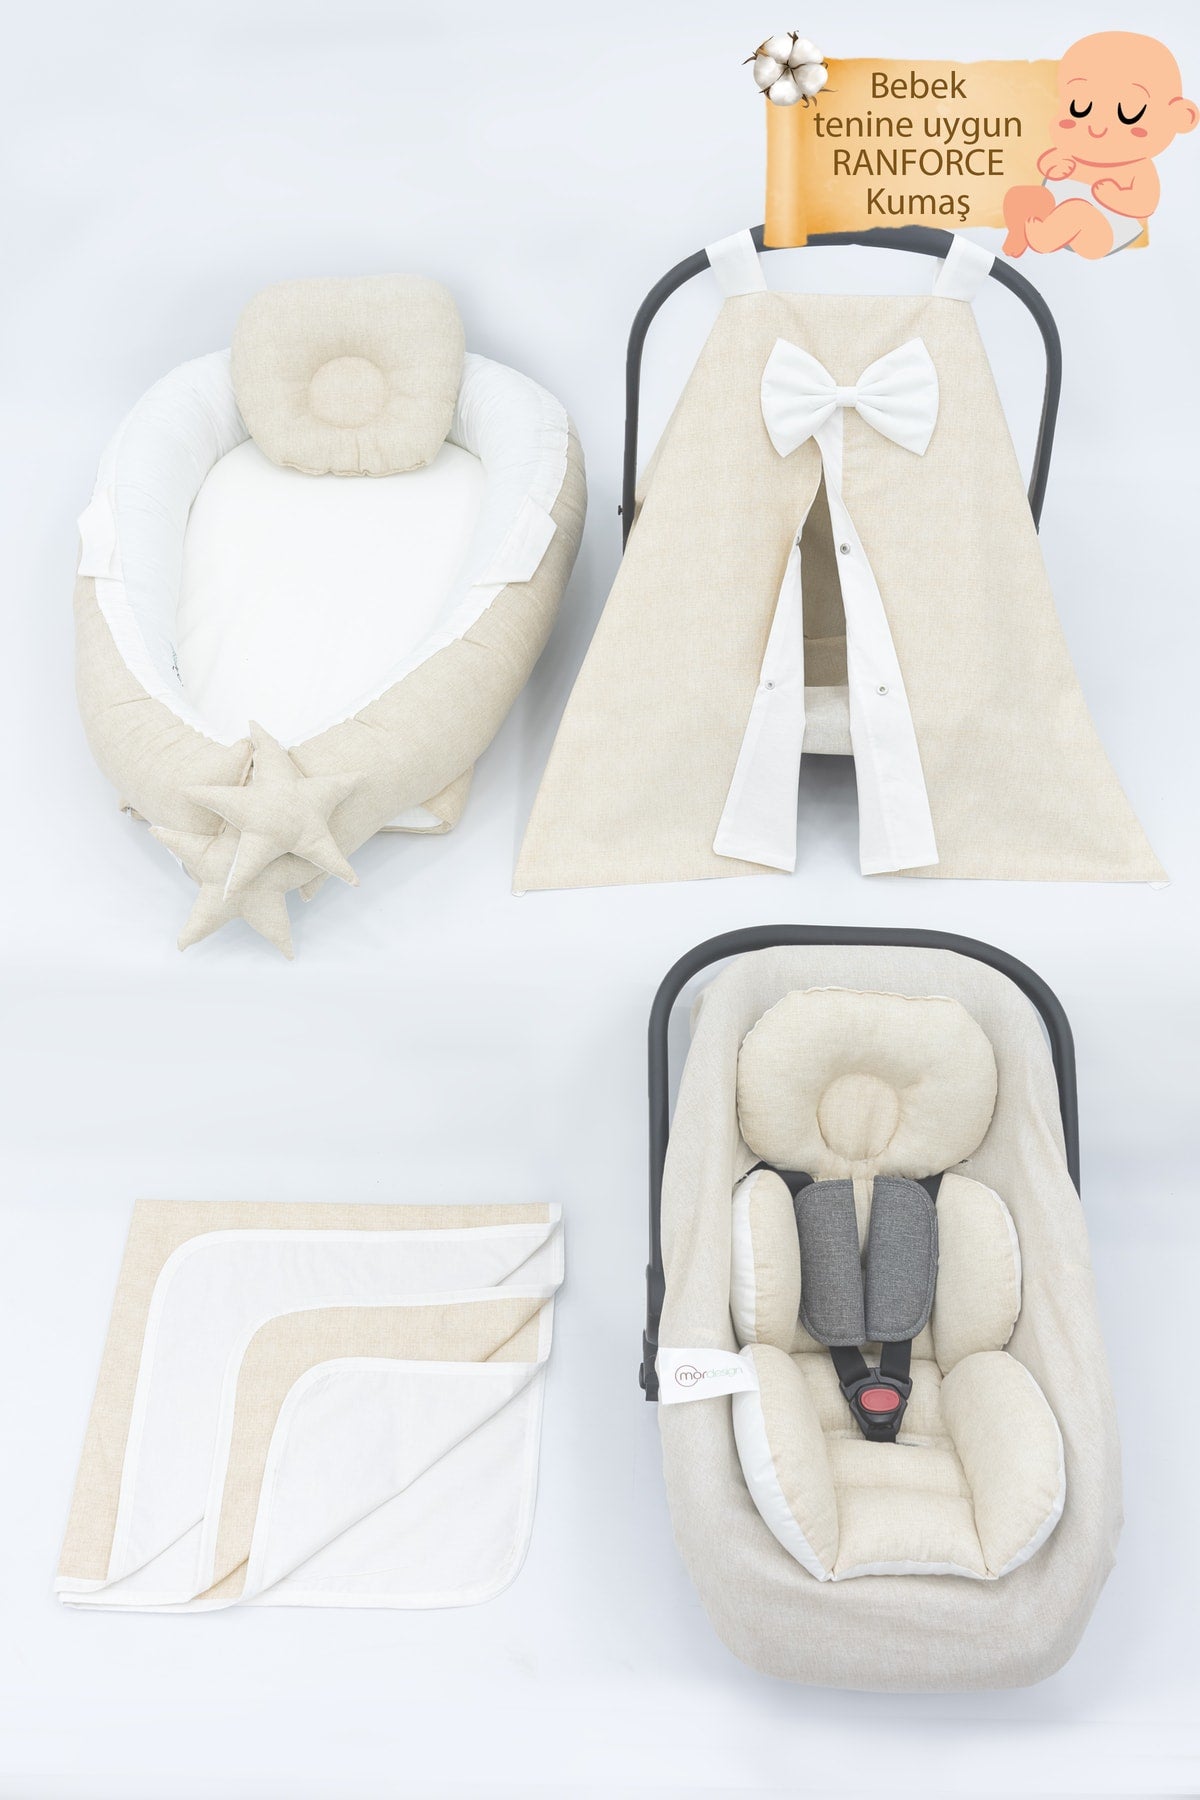 Babynest Orthopedic Baby Mattress, Pique and Stroller Accessories Set of 6, Rainbow Series, Cream